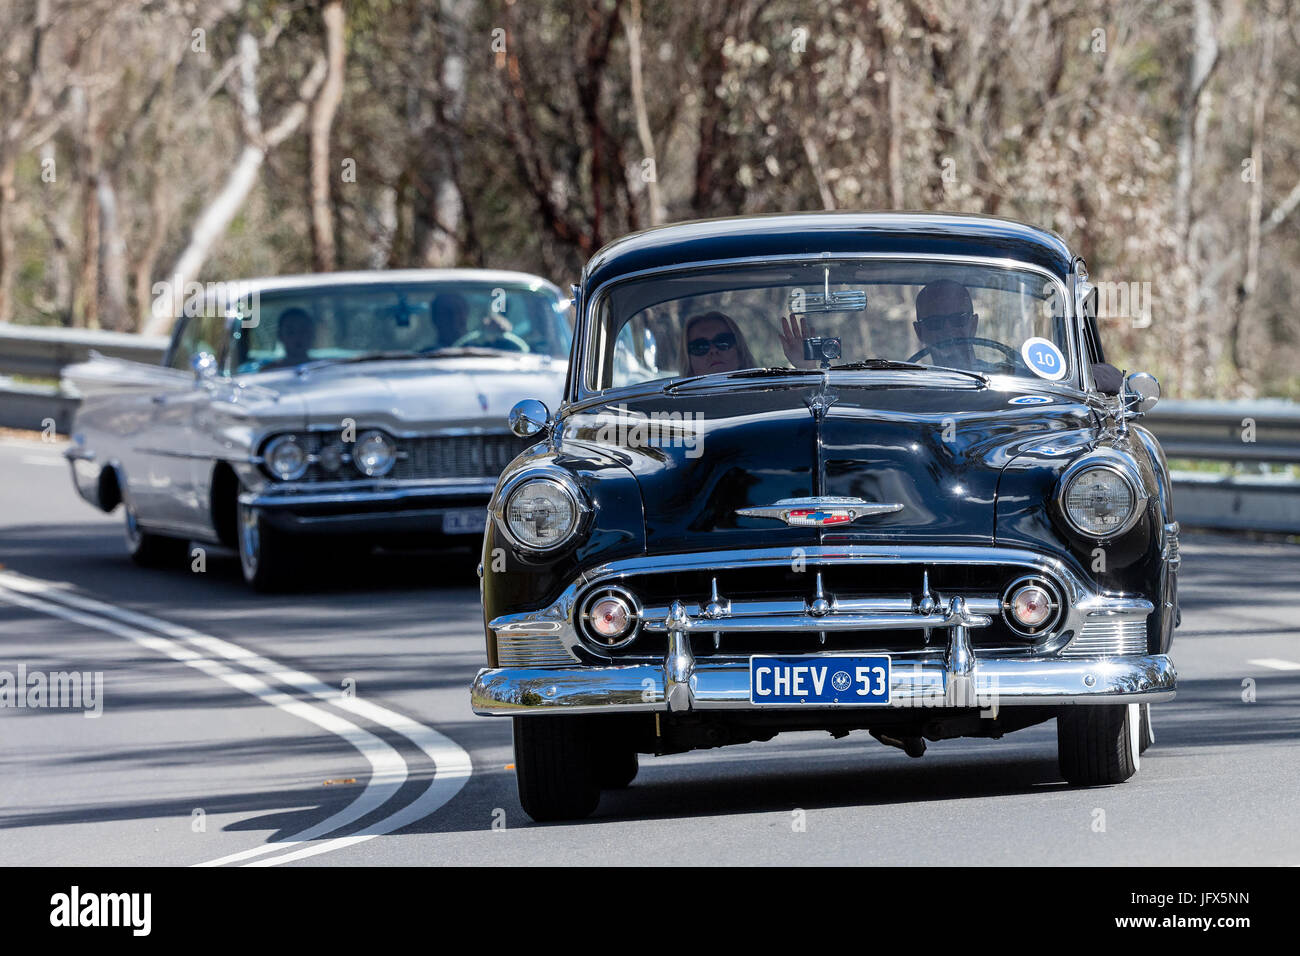 Vintage 1953 Chevrolet Belair Sedan driving on country roads near the town of Birdwood, South Australia. Stock Photo